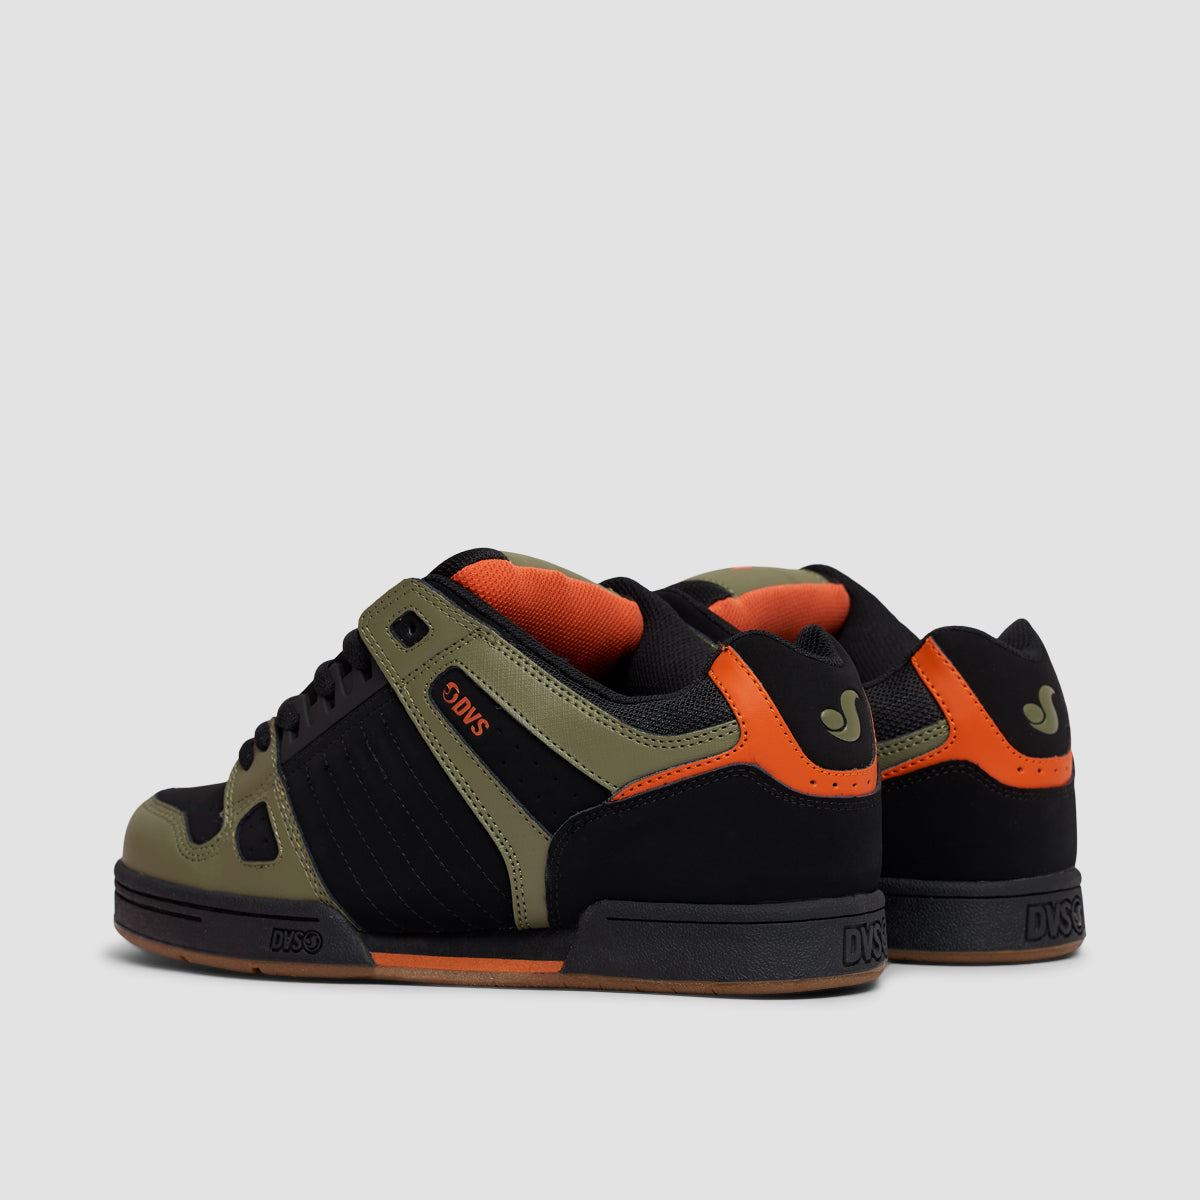 DVS Celsius Shoes - Black/Olive/Orange Nubuck